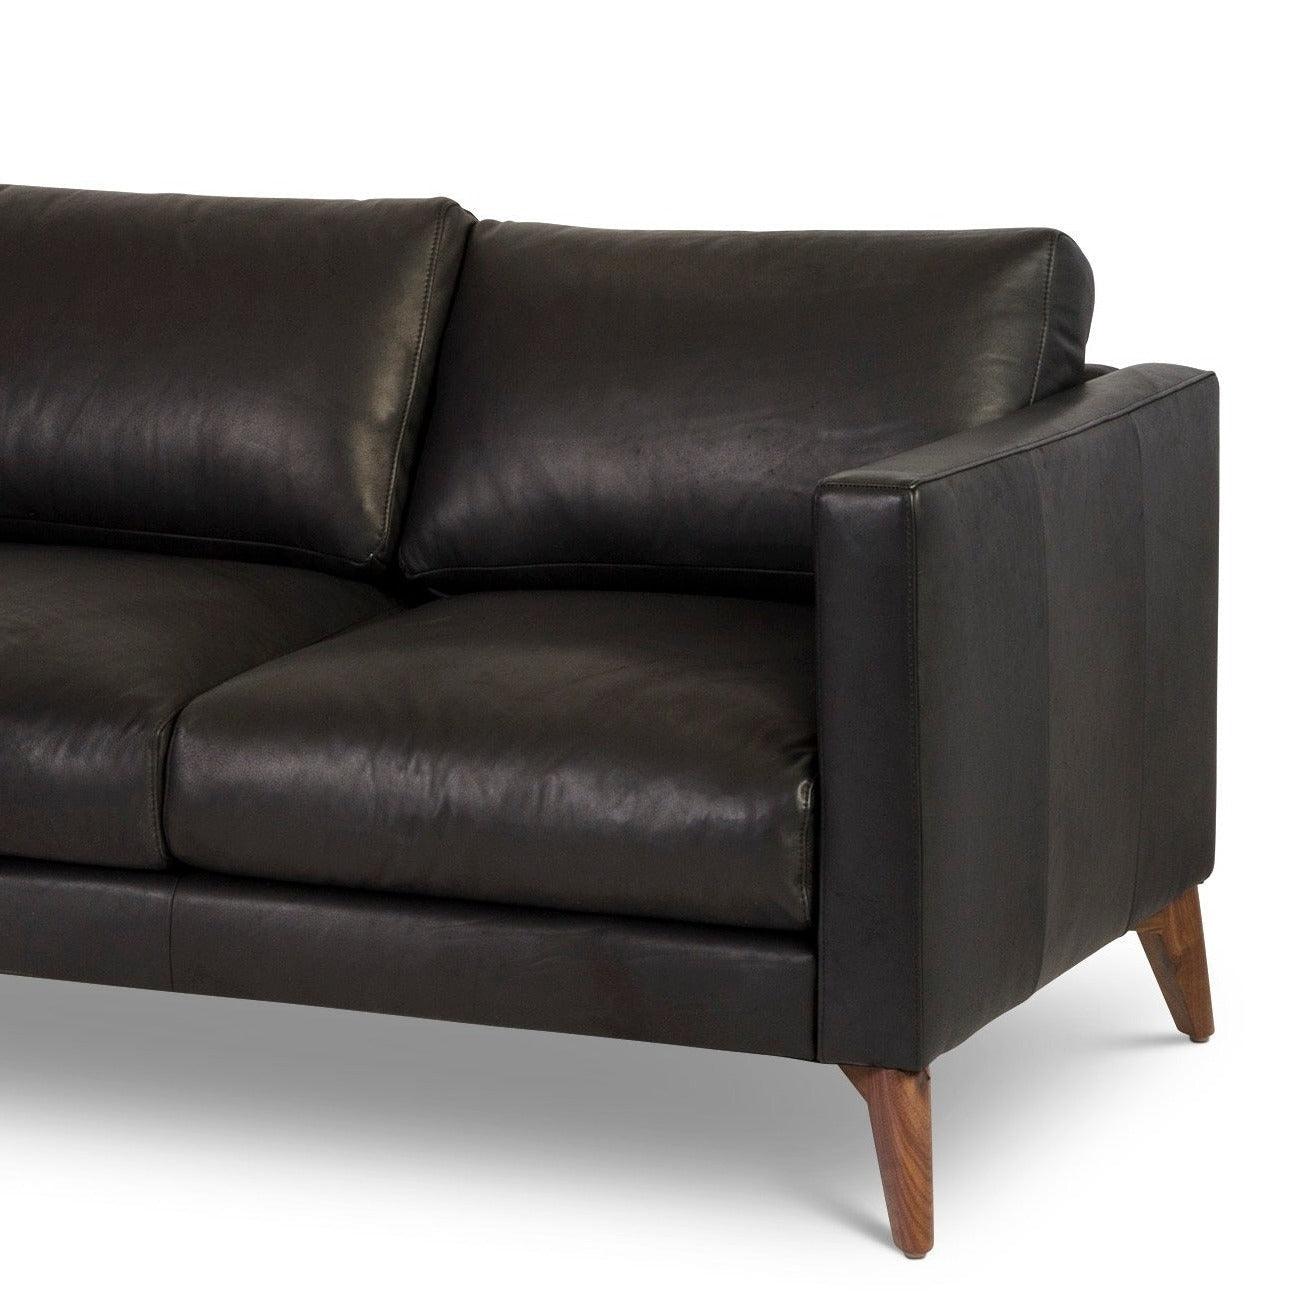 Burbank Small Leather Left Facing Sectional Sofa - Uptown Sebastian